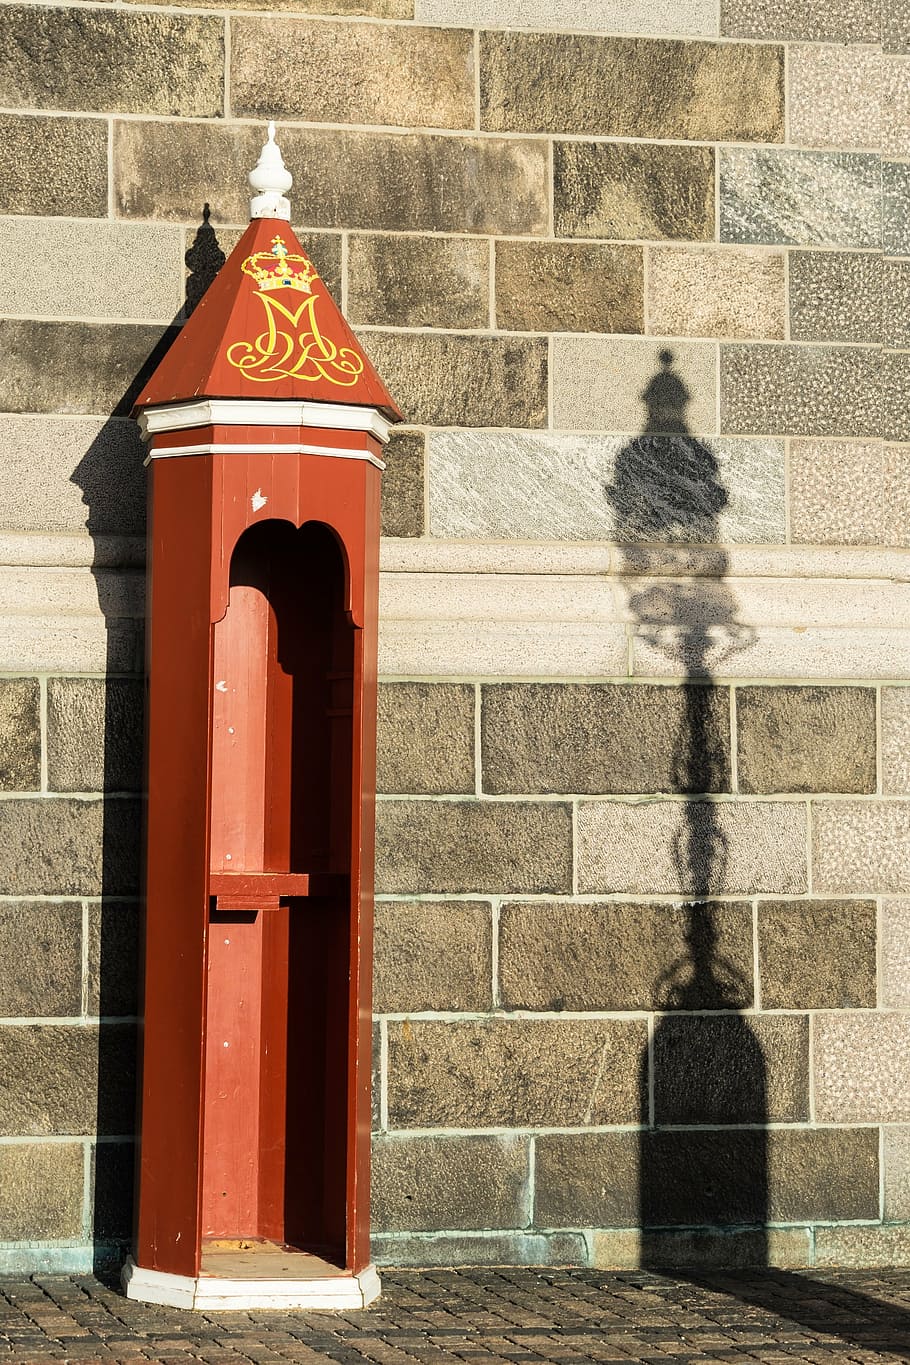 sentry box, shadow, lamp, christiansborg palace, copenhagen, denmark, europe, post, guard, shelter